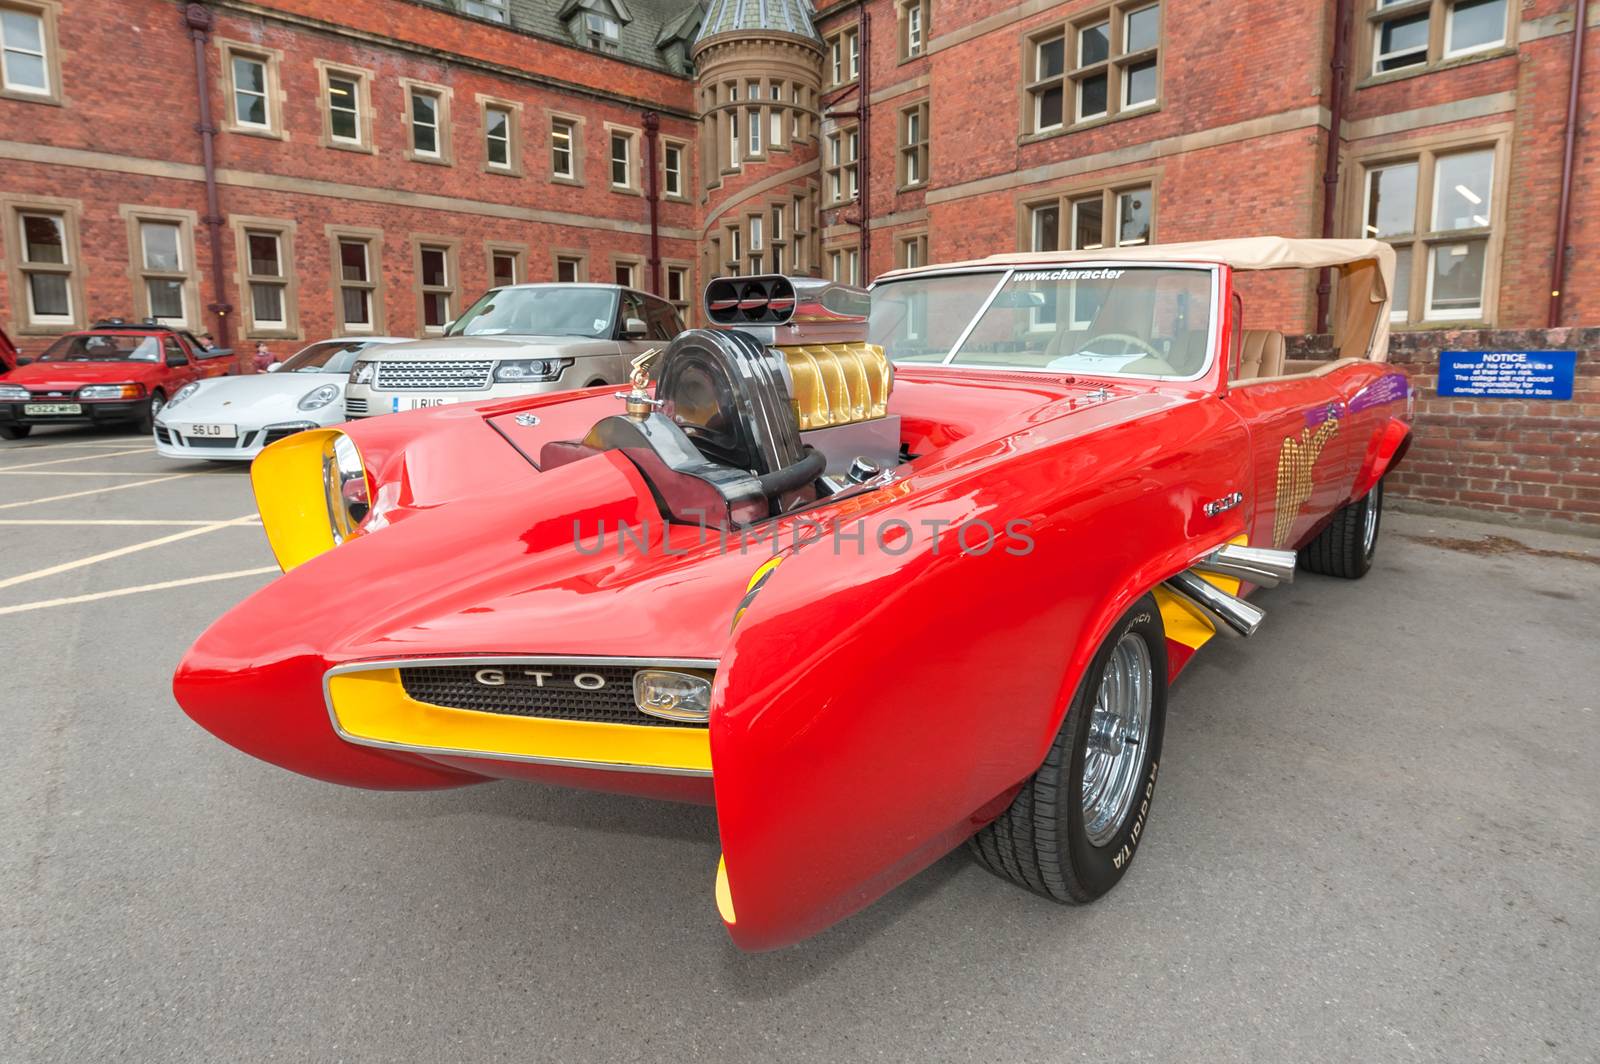 Winnersh, UK - May 18, 2013: The Monkees 70's TV show Pontica GTO Monkeemobile at Bearwood College in Winnersh, UK